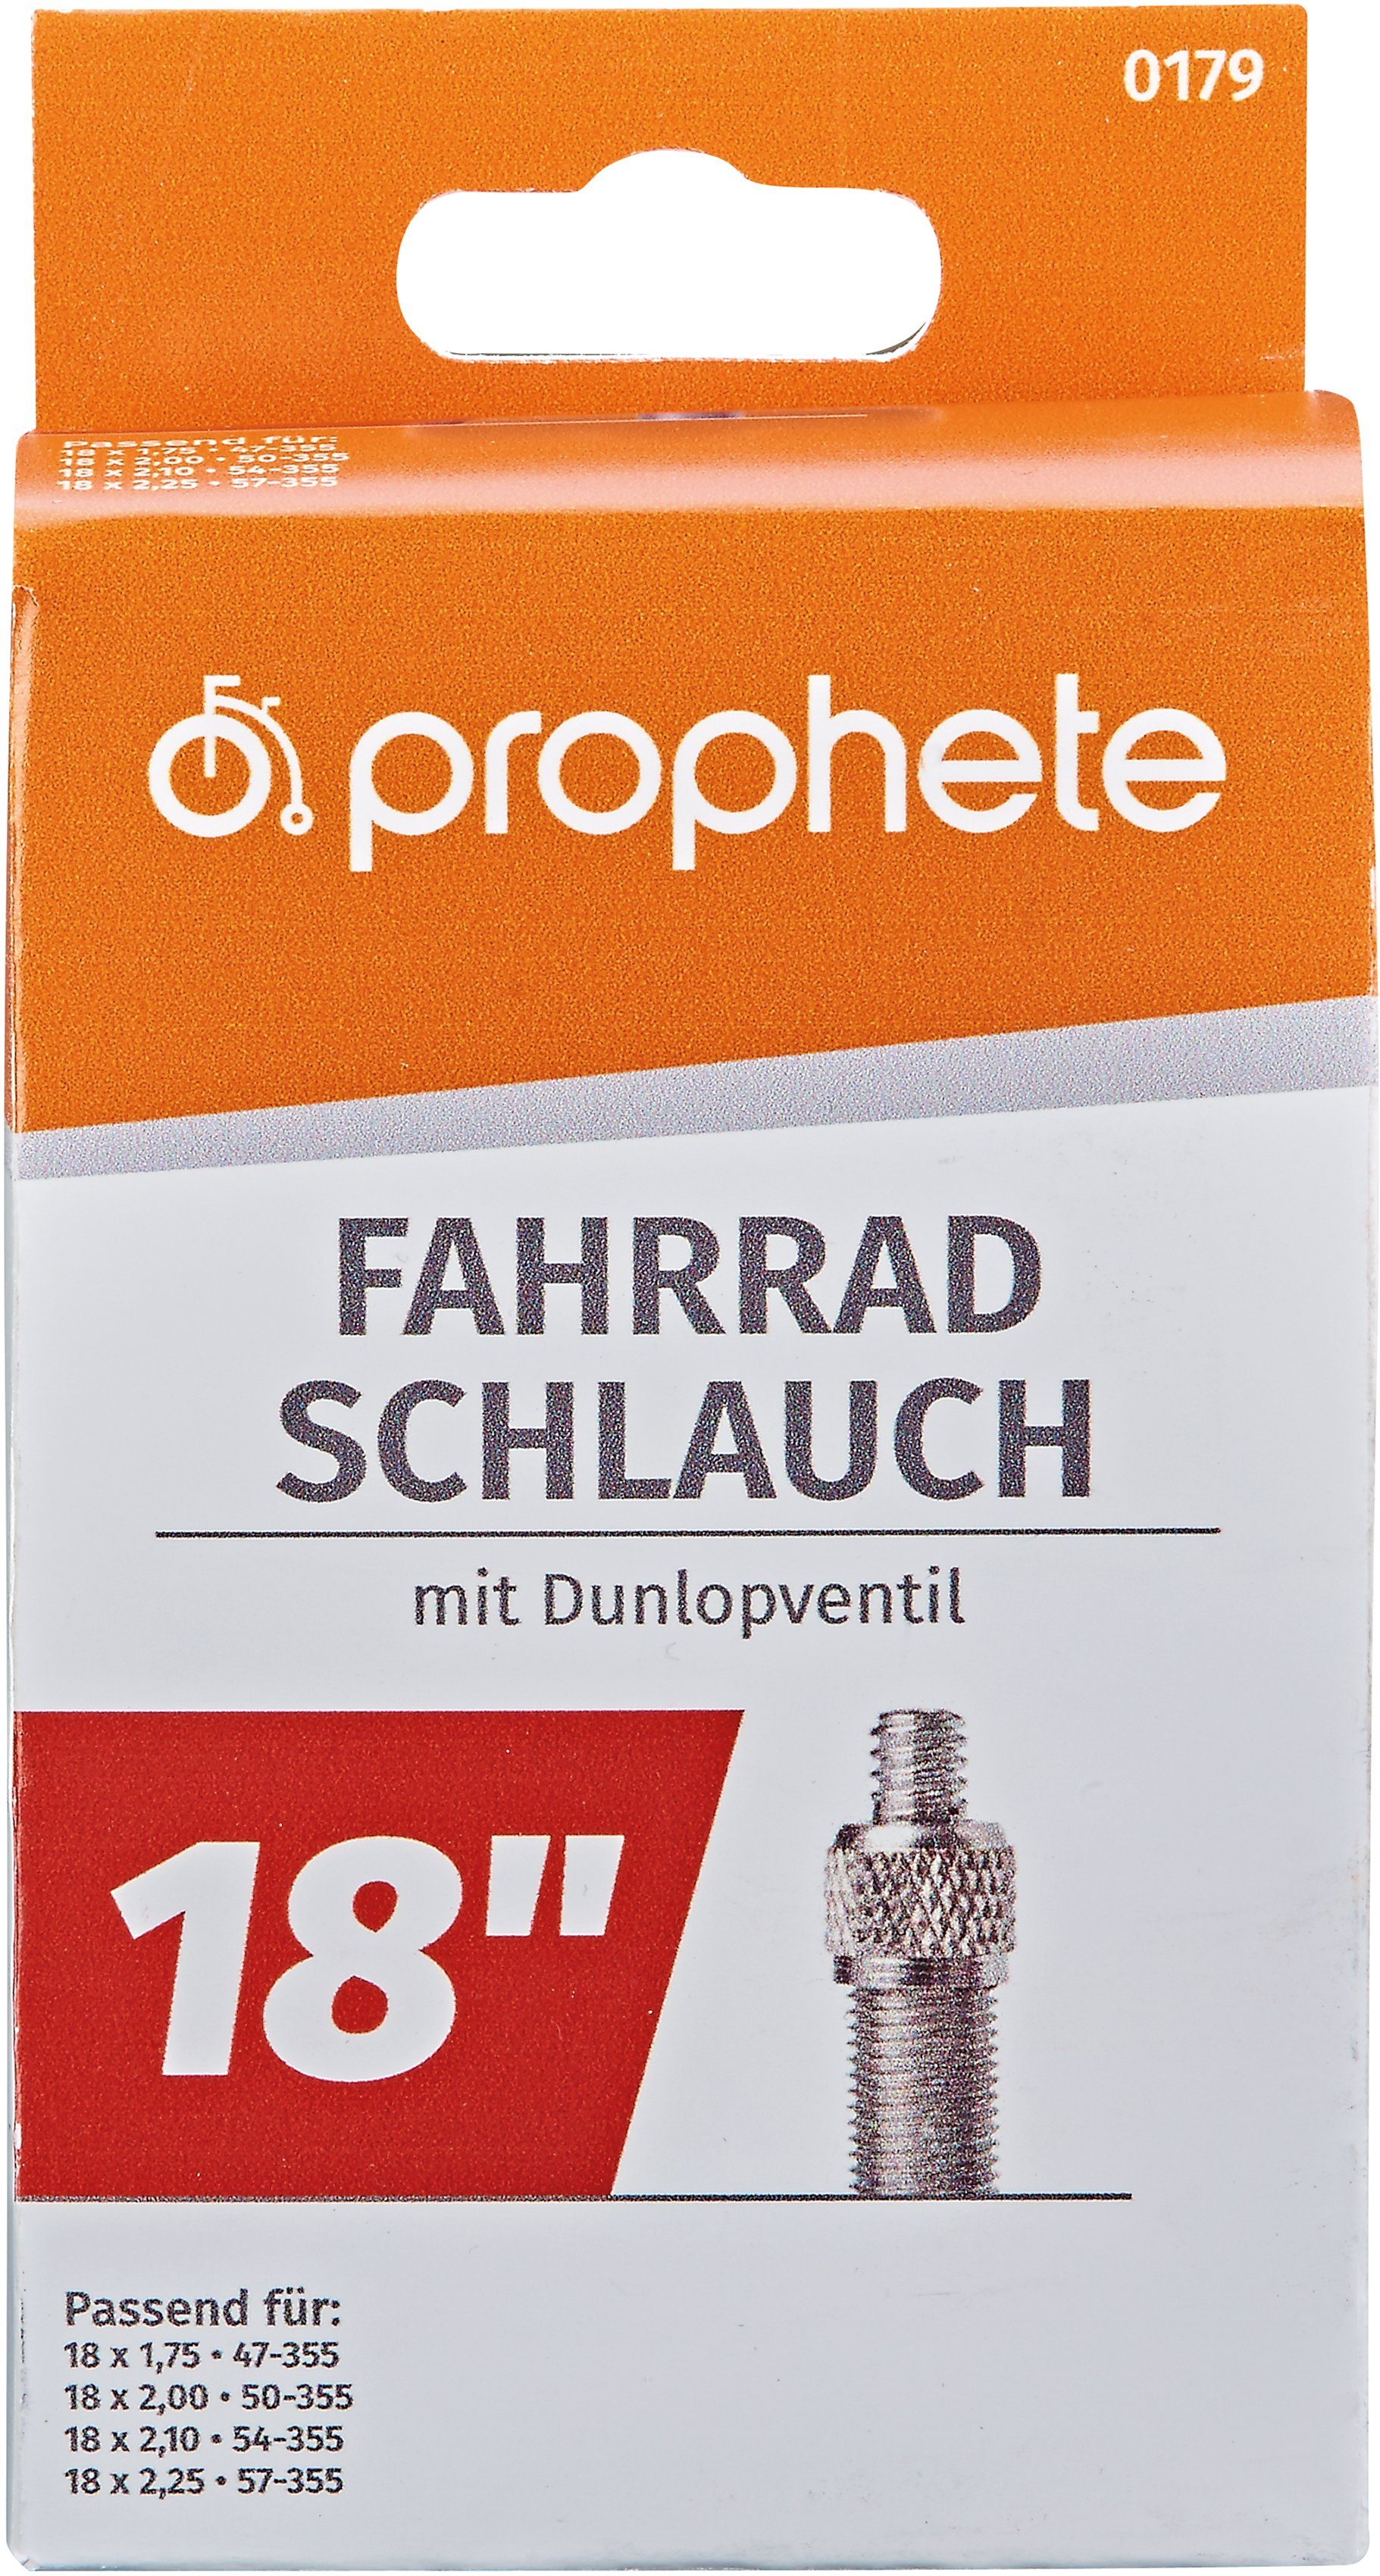 x 18 cm), Prophete 1,75 (47-355) 18 Fahrradschlauch (45,72 2 Zoll Fahrradschlauch, x